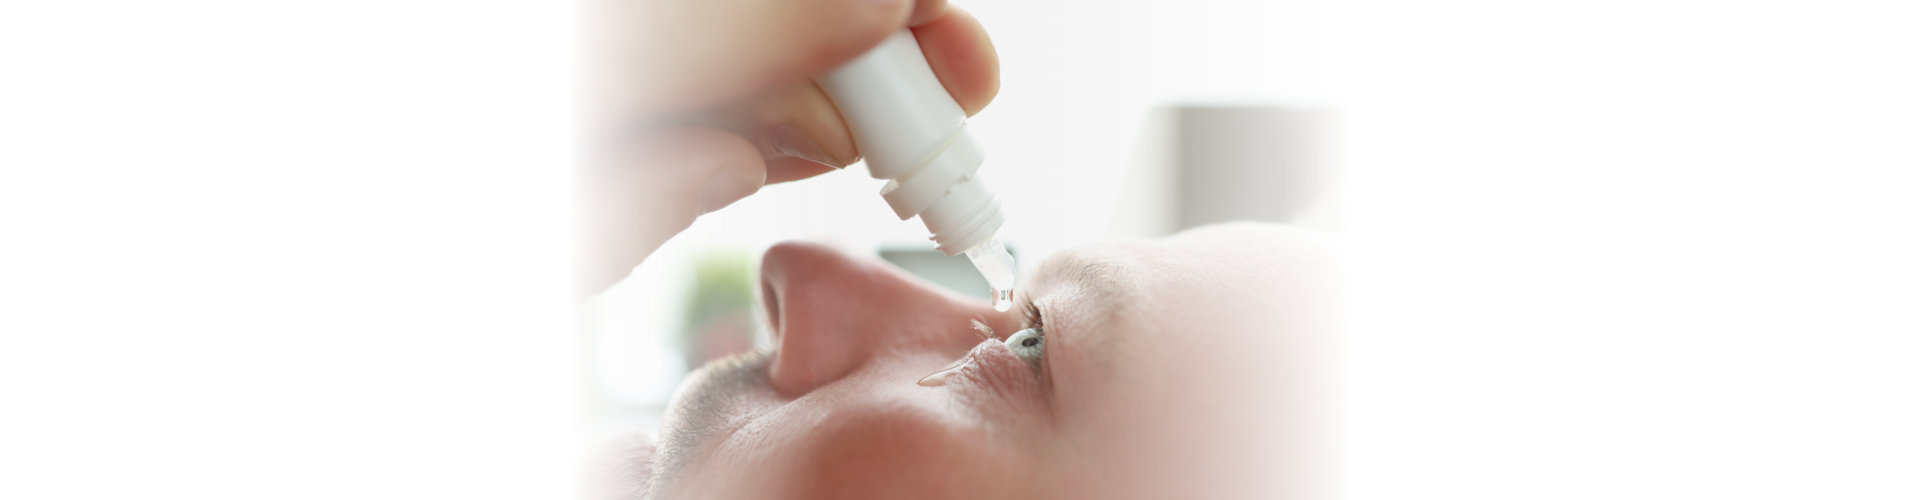 Man dripping antibacterial drops into his eye closeup